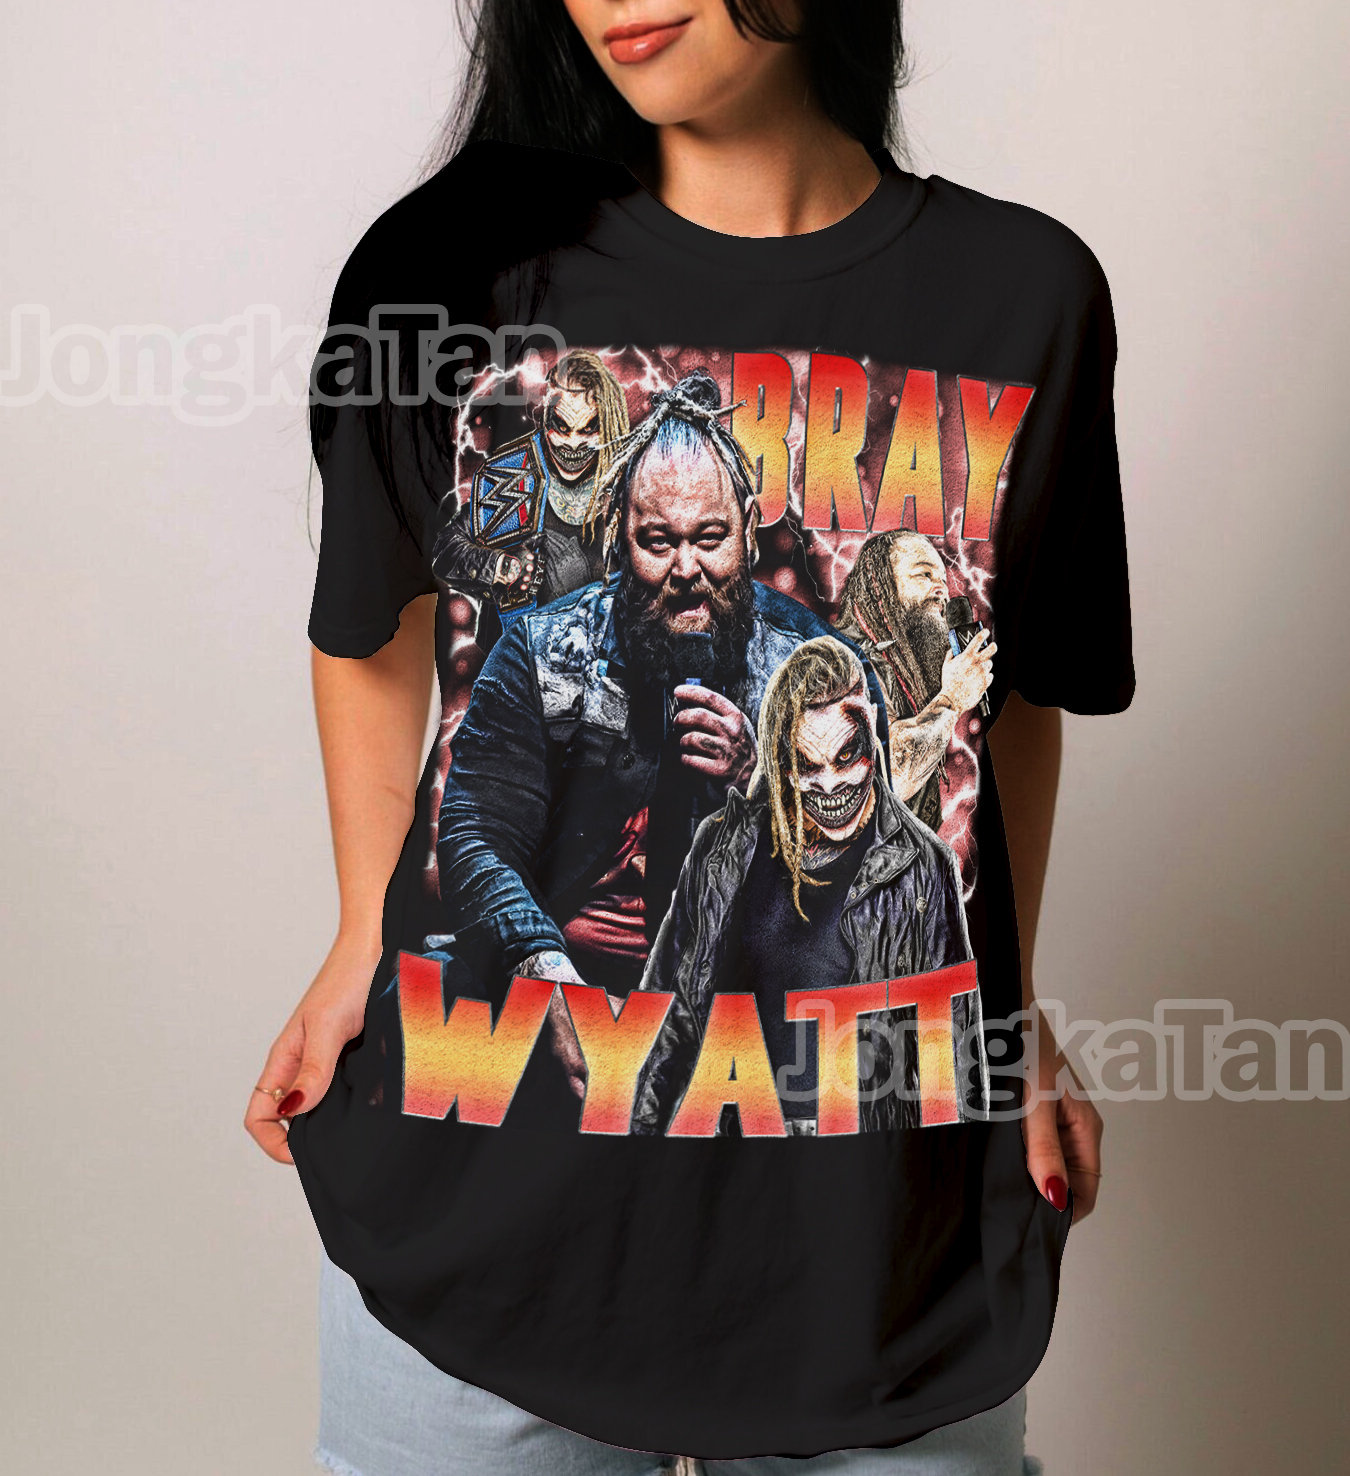 Windham Rotunda aka Bray Wyatt Memorial Shirt sold by Unfair Blue, SKU  55386740